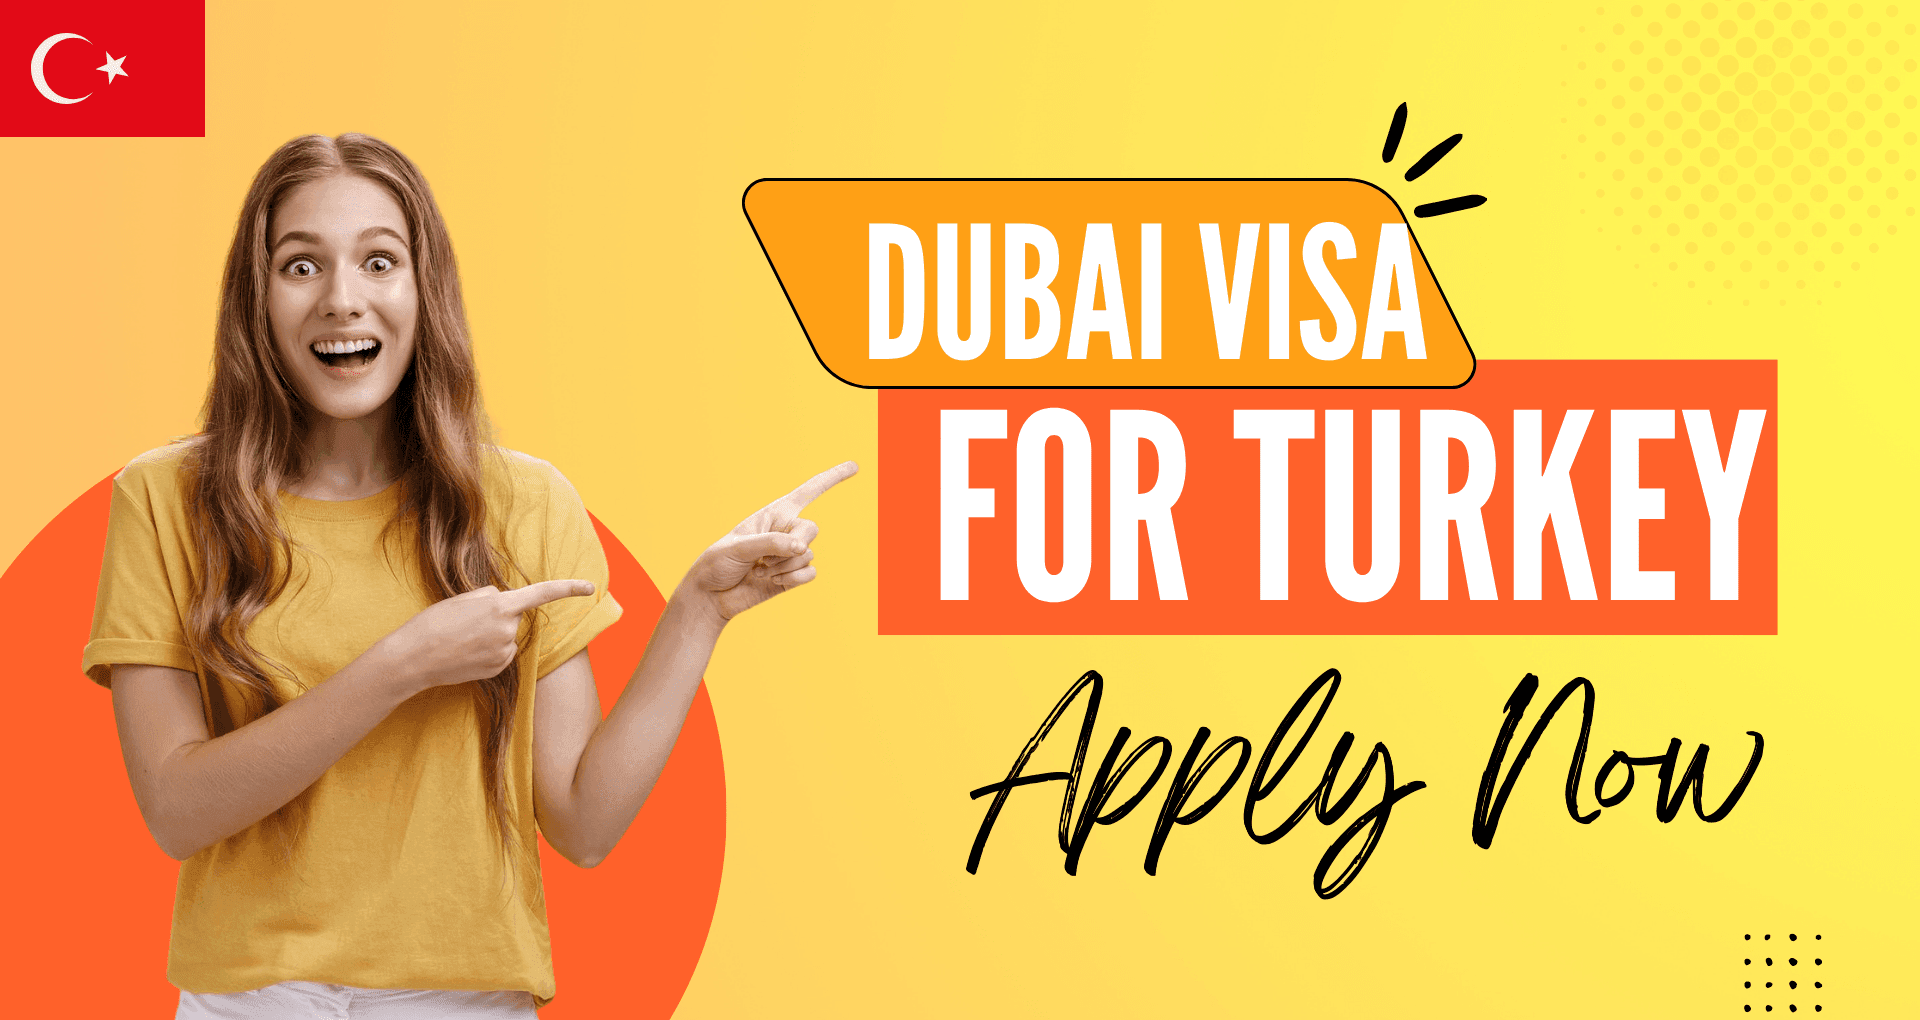 Dubai visa for Turkey